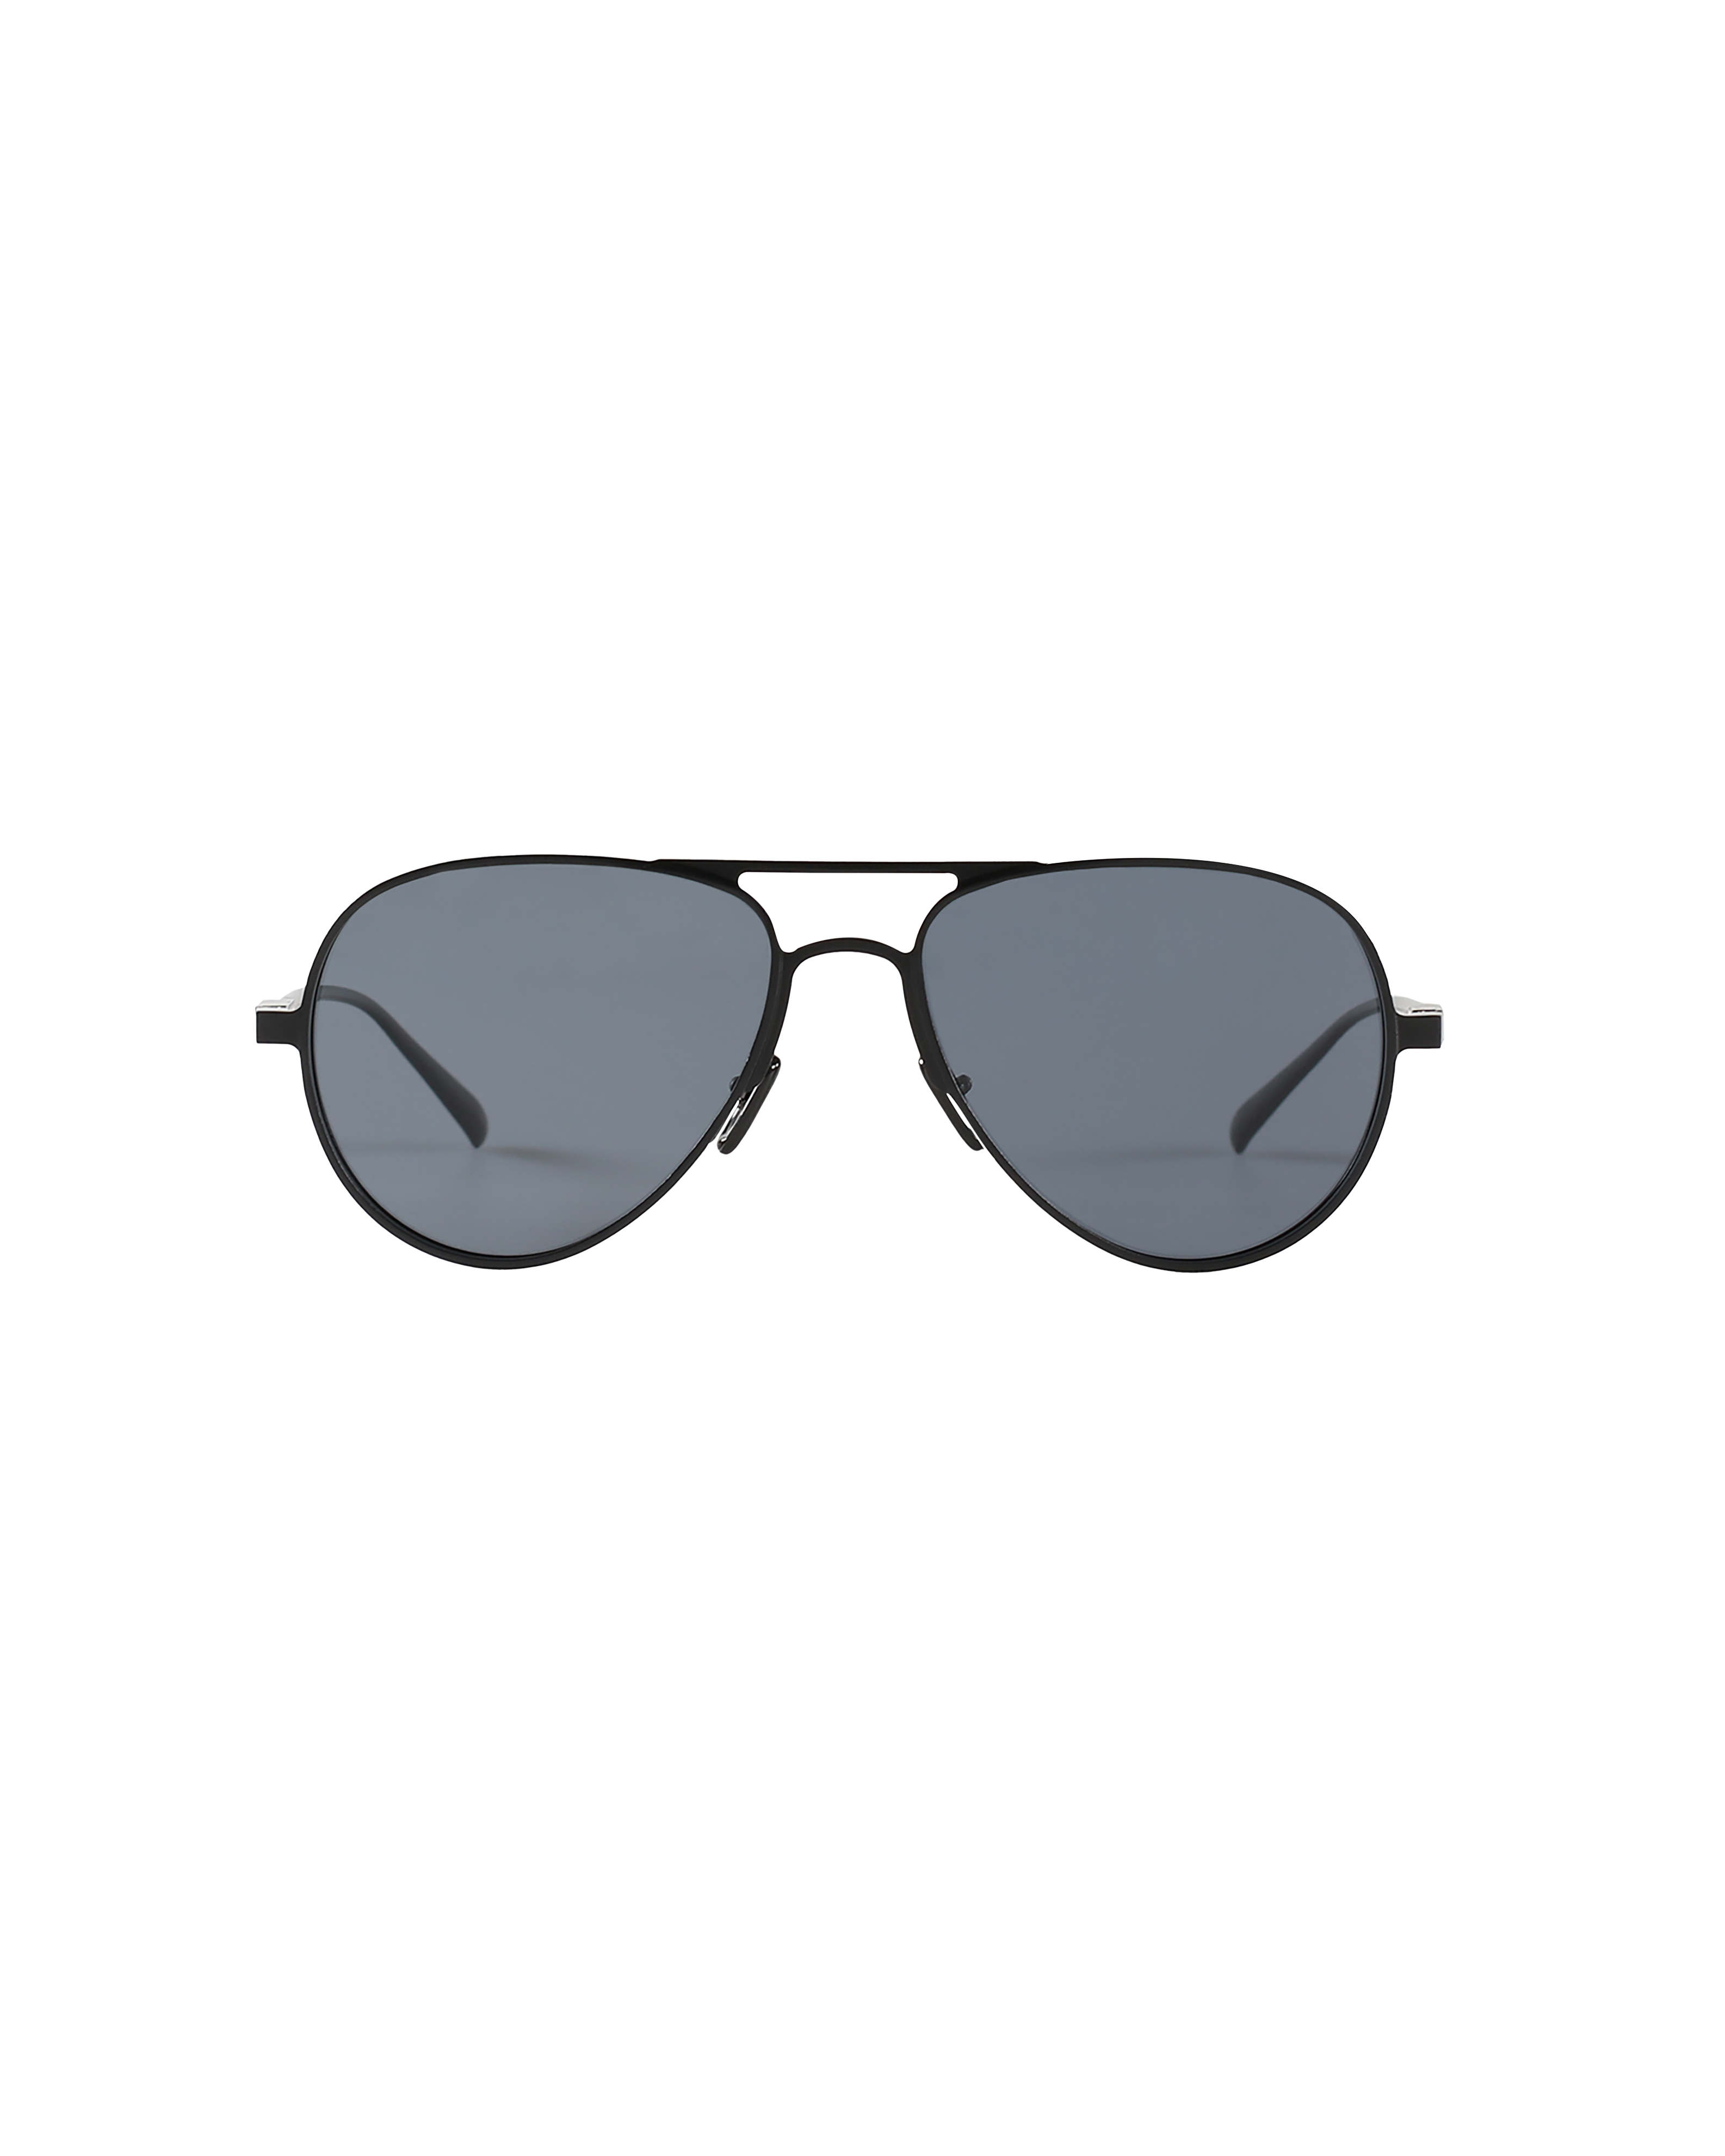 Lafayette Aviators - Premium Polarized Men's Sunglasses - , Aerospace-Grade Aluminum | by All Citizens | Matte Black